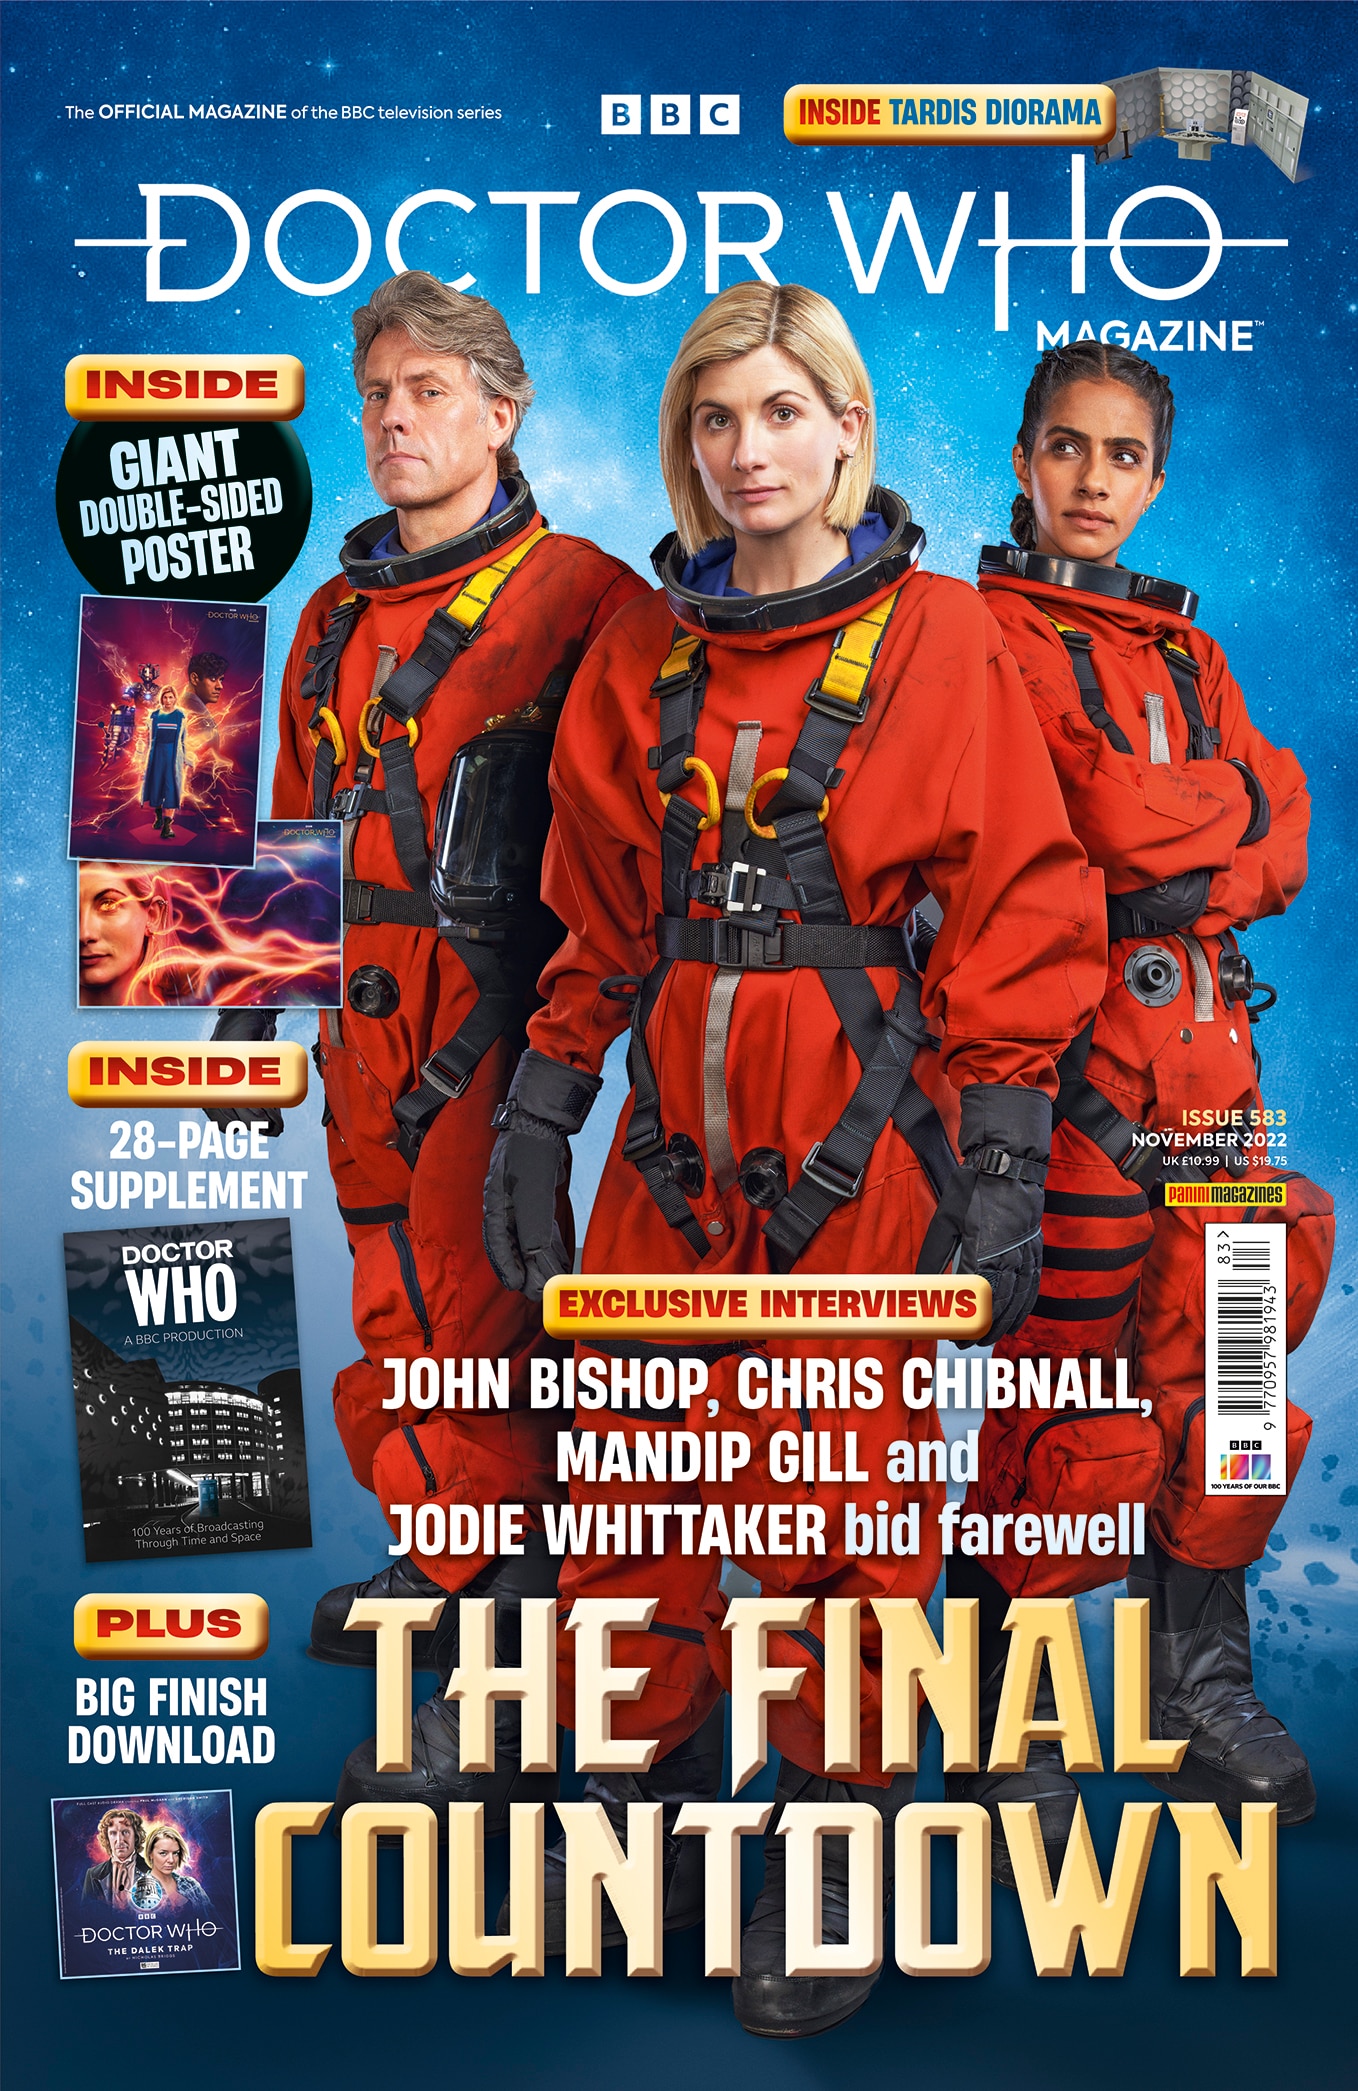 Doctor Who Magazine 583